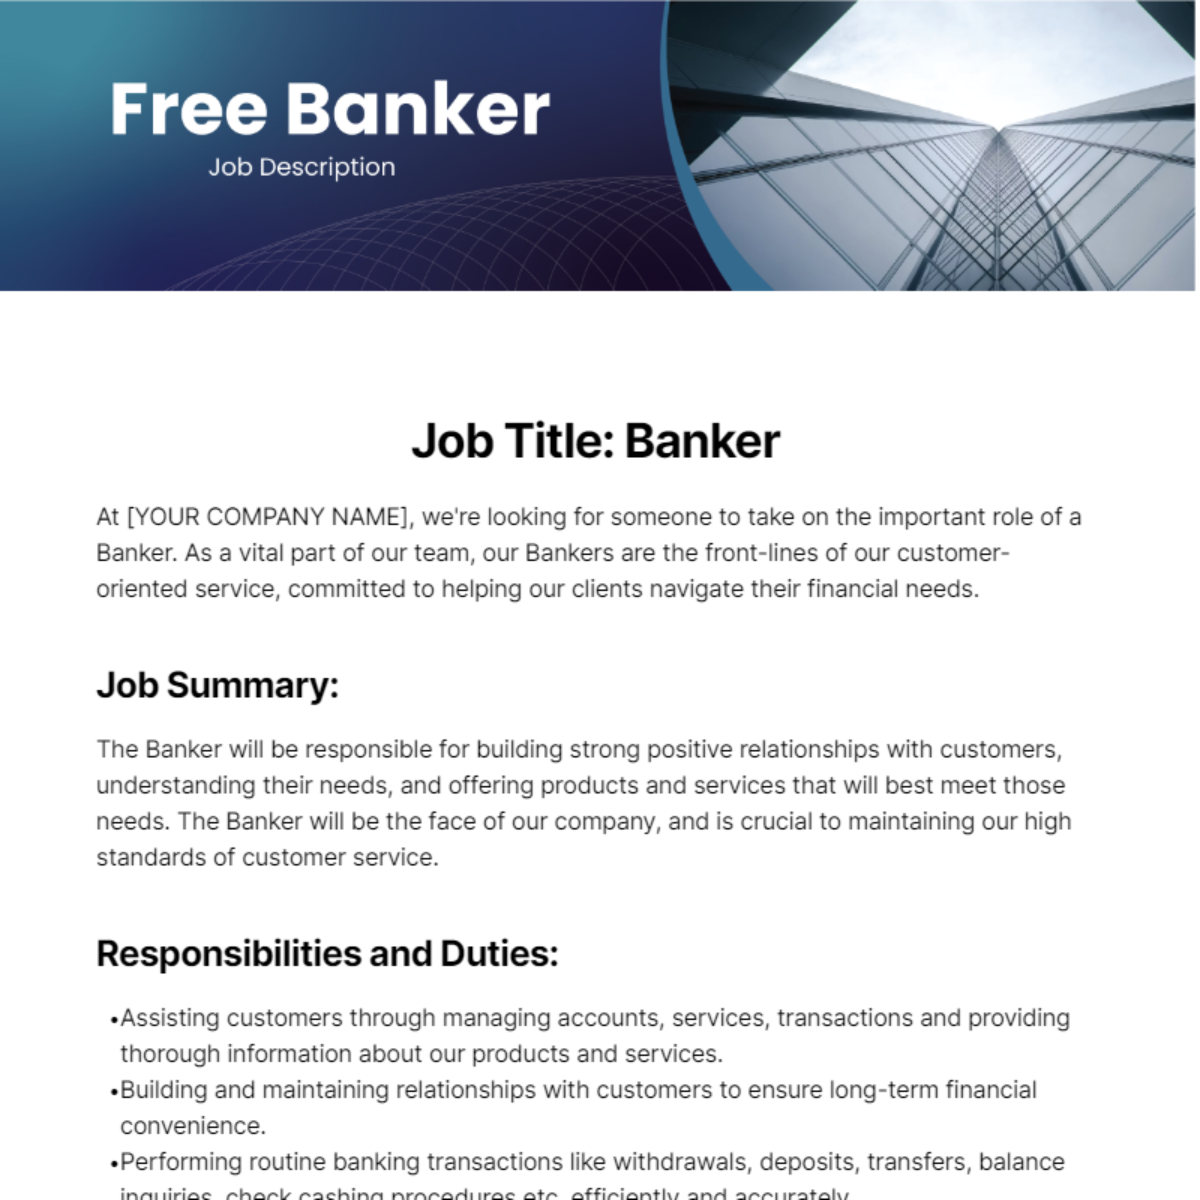 Free Banker Job Description Template